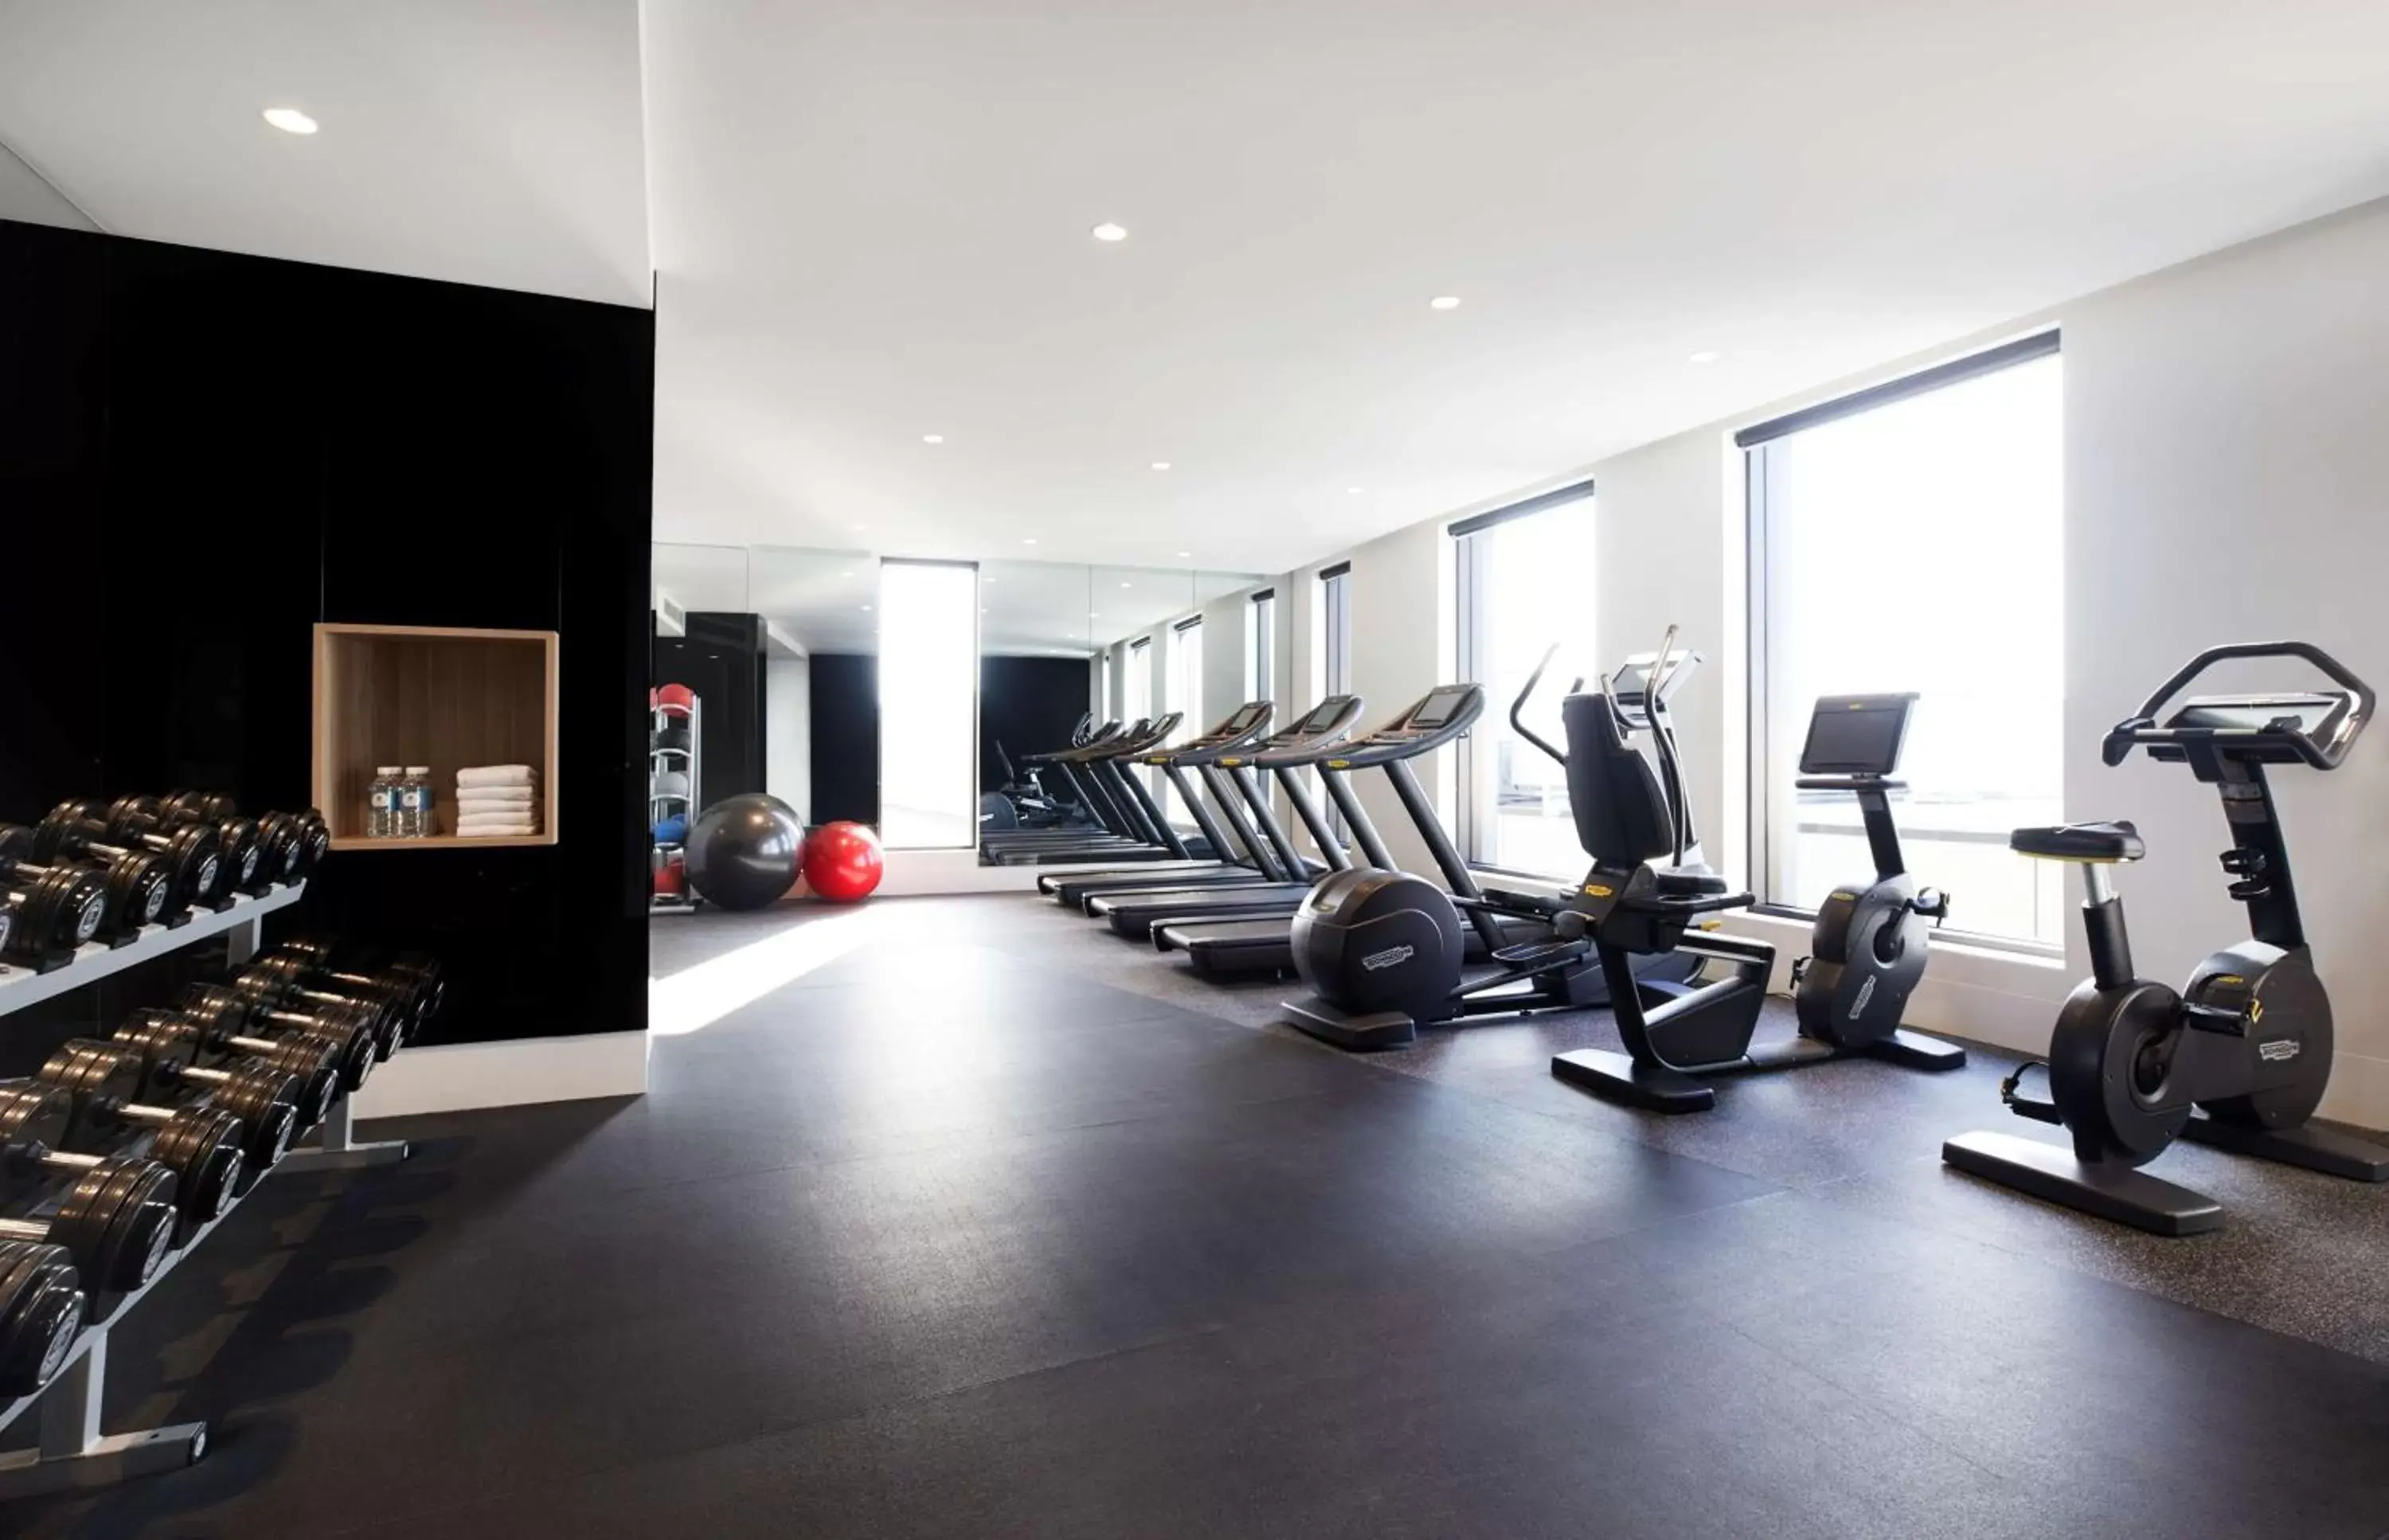 Fitness centre/facilities, Fitness Center/Facilities in Hyatt Place Melbourne, Essendon Fields